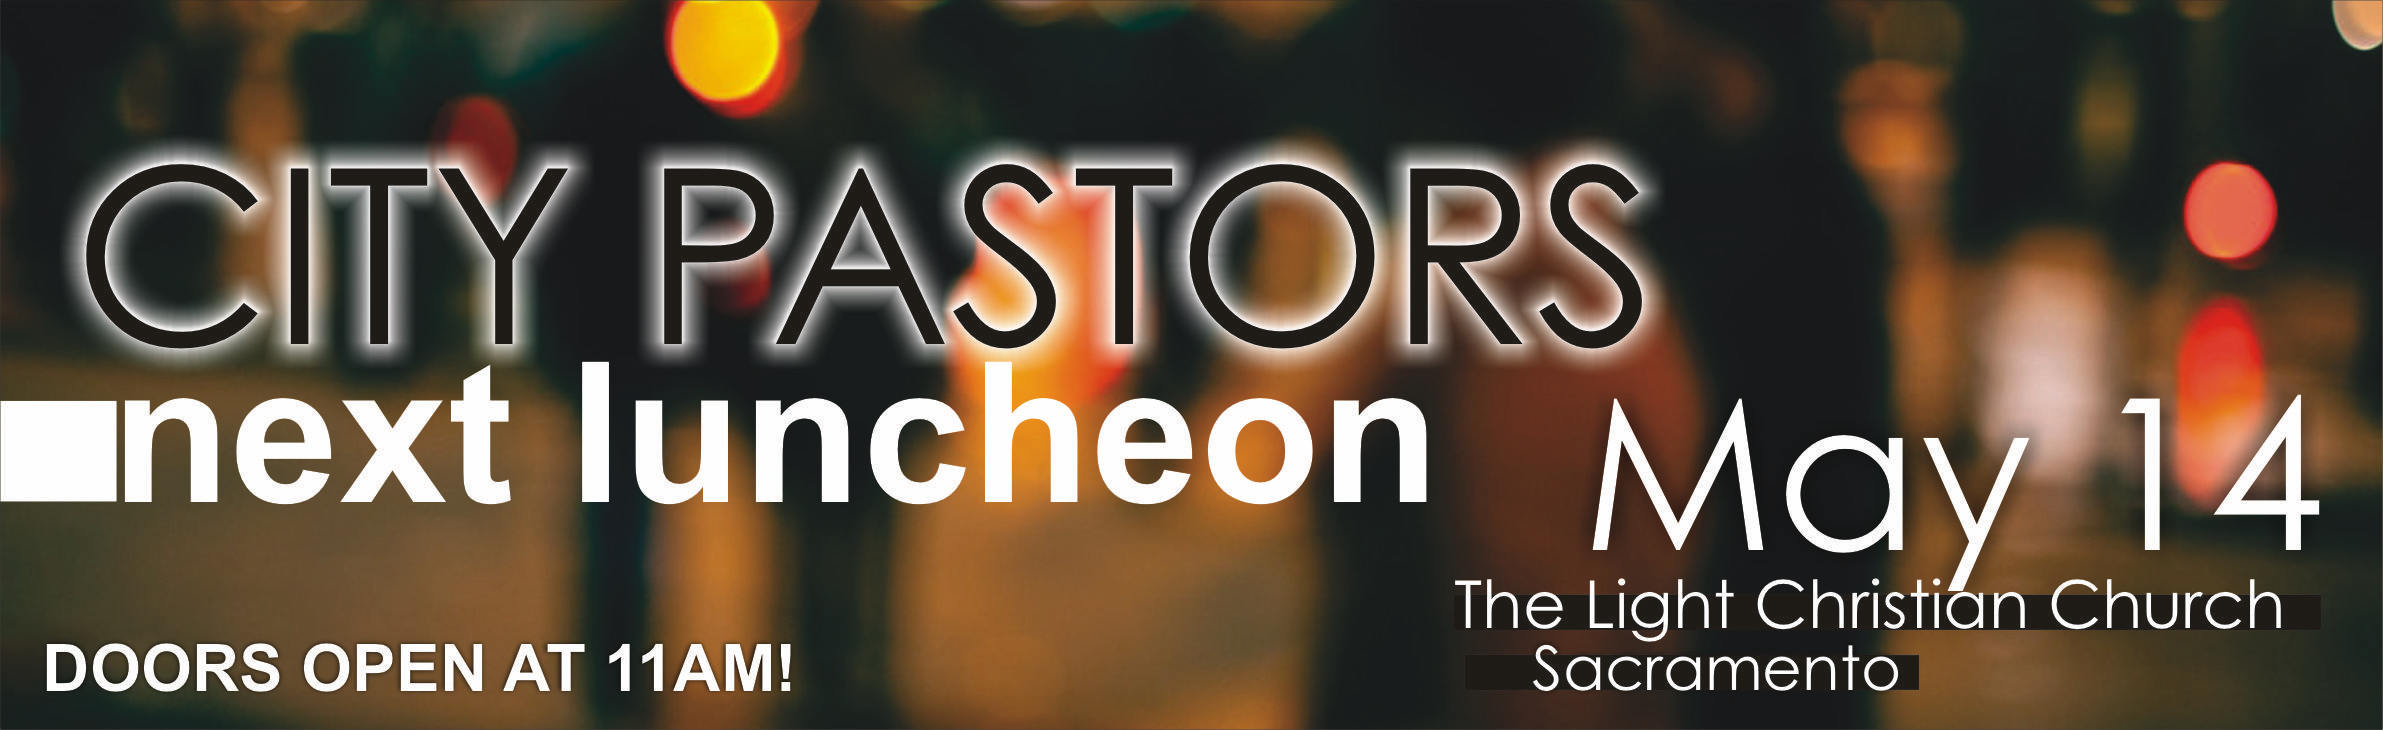 city pastors eblast headers 2020 May 2a-3